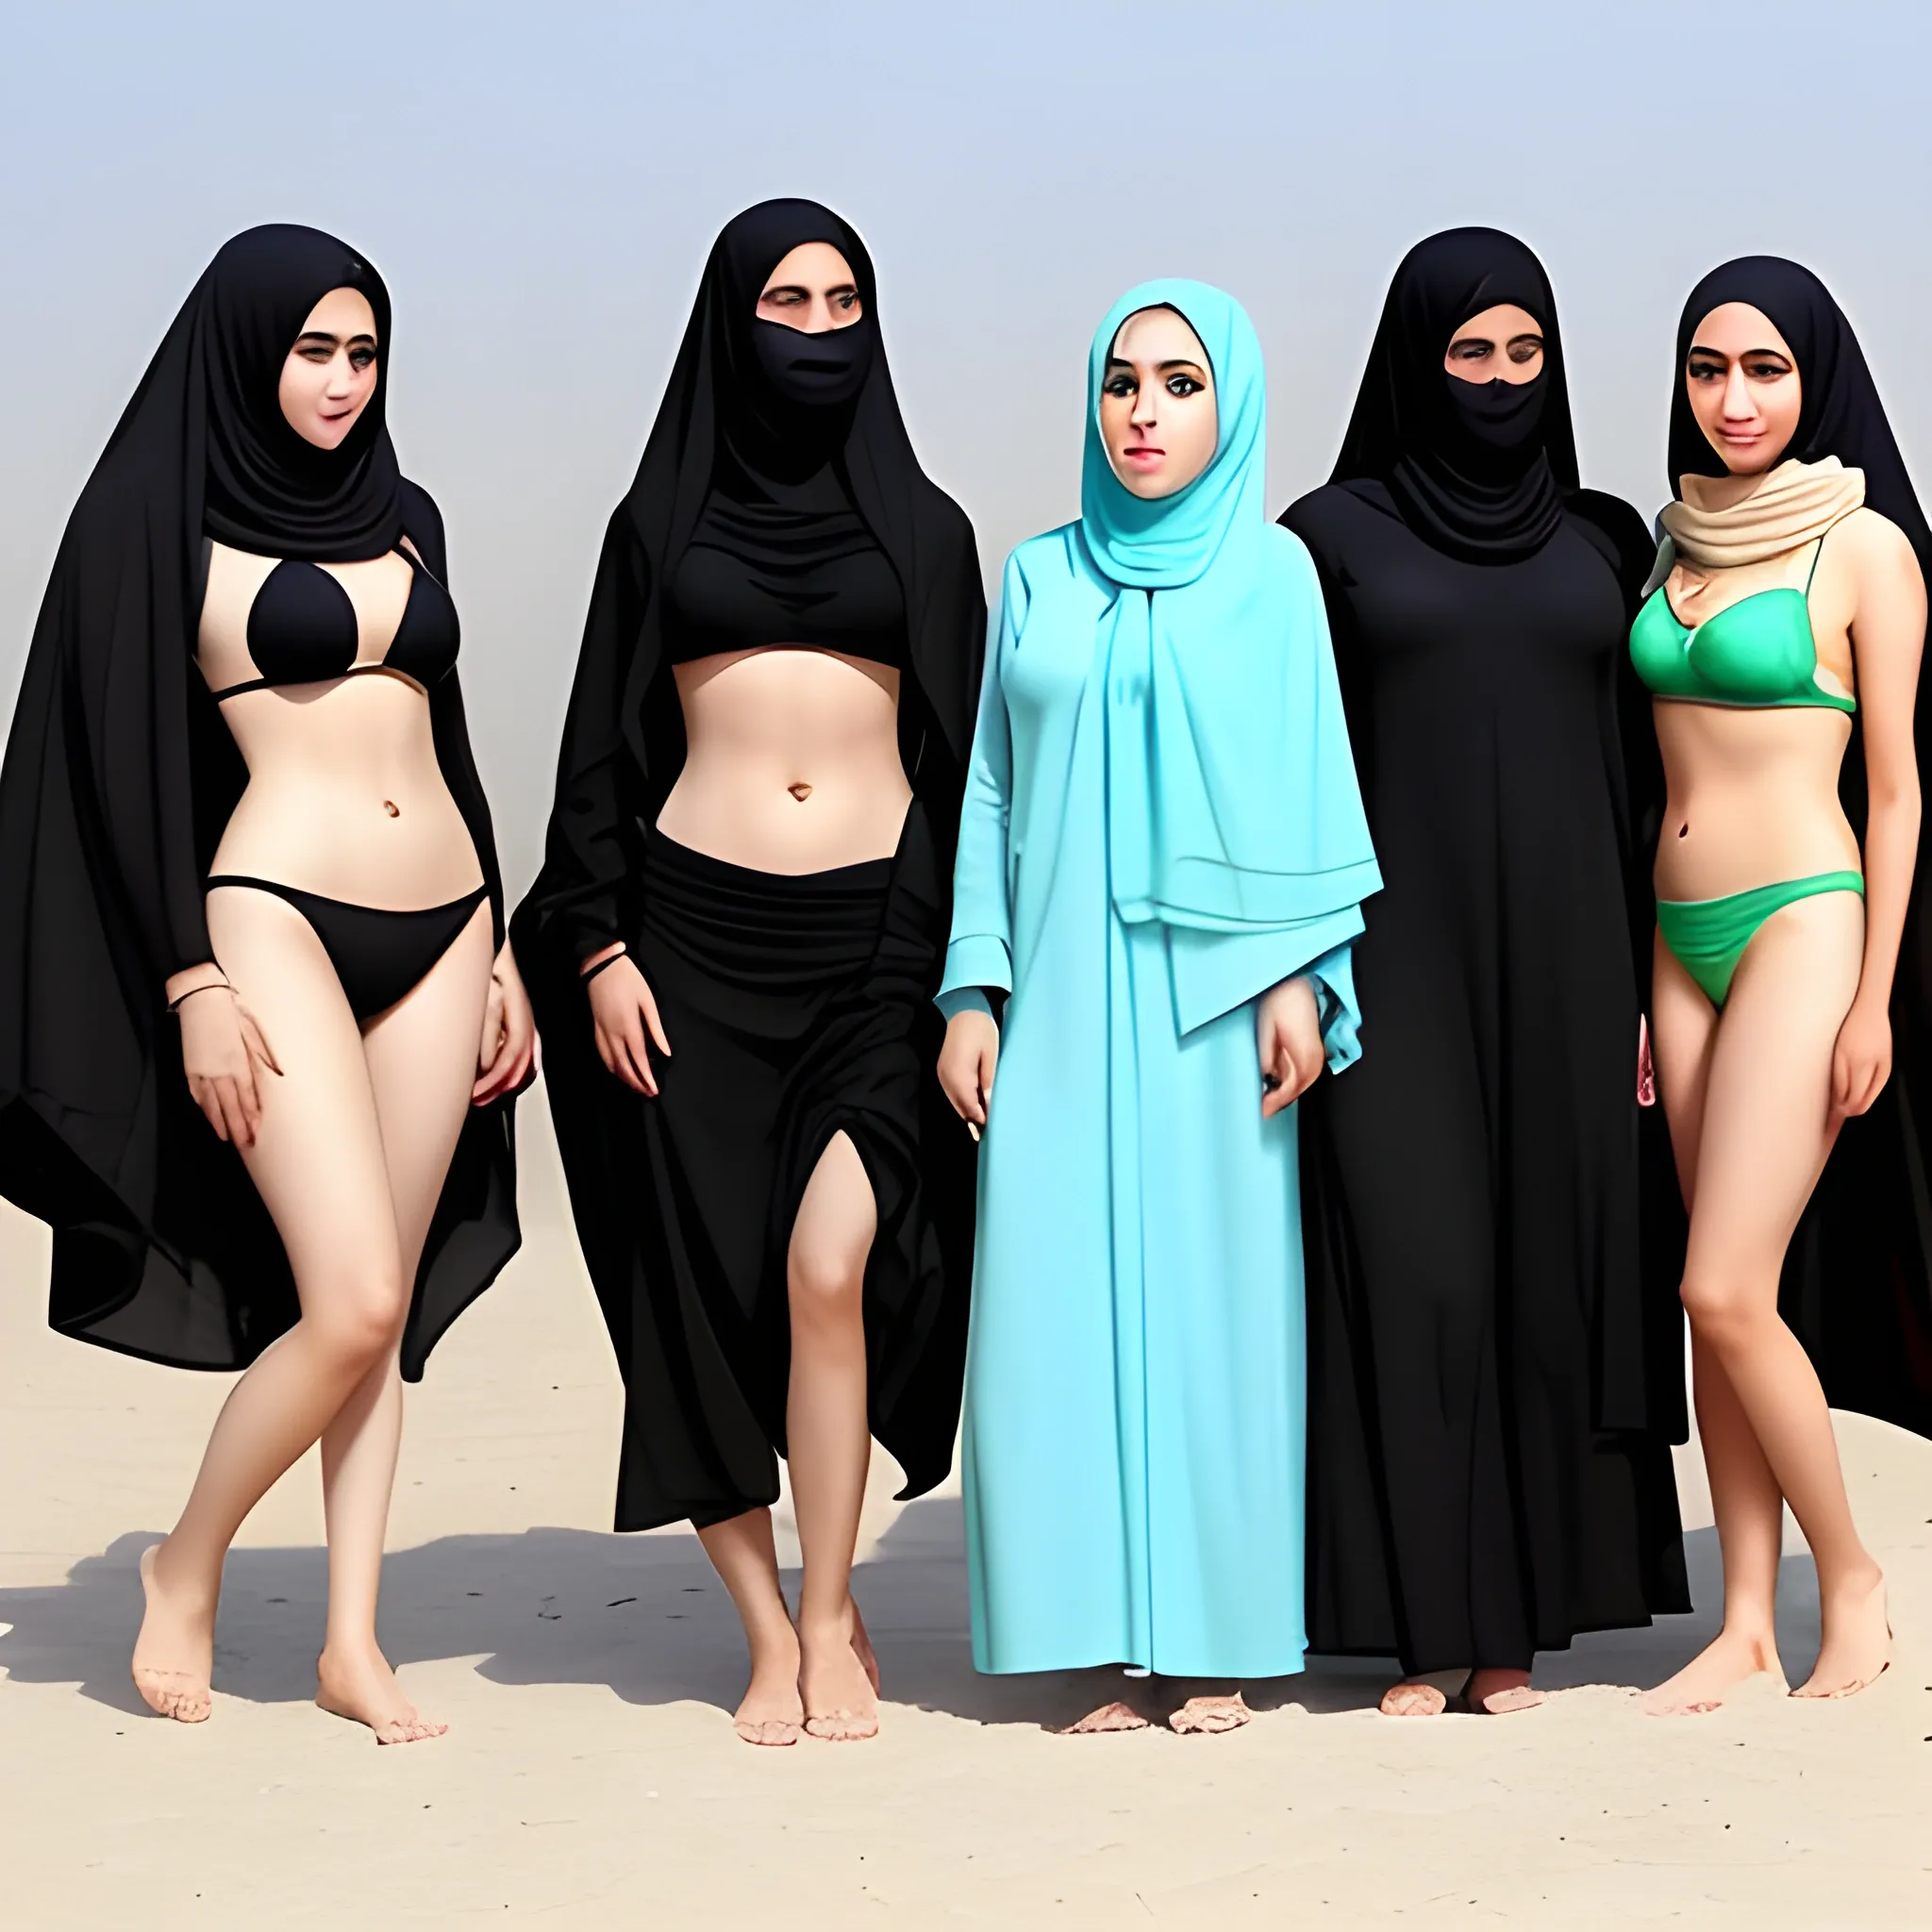  Iranian woman with a chador hijab - bikini- five people